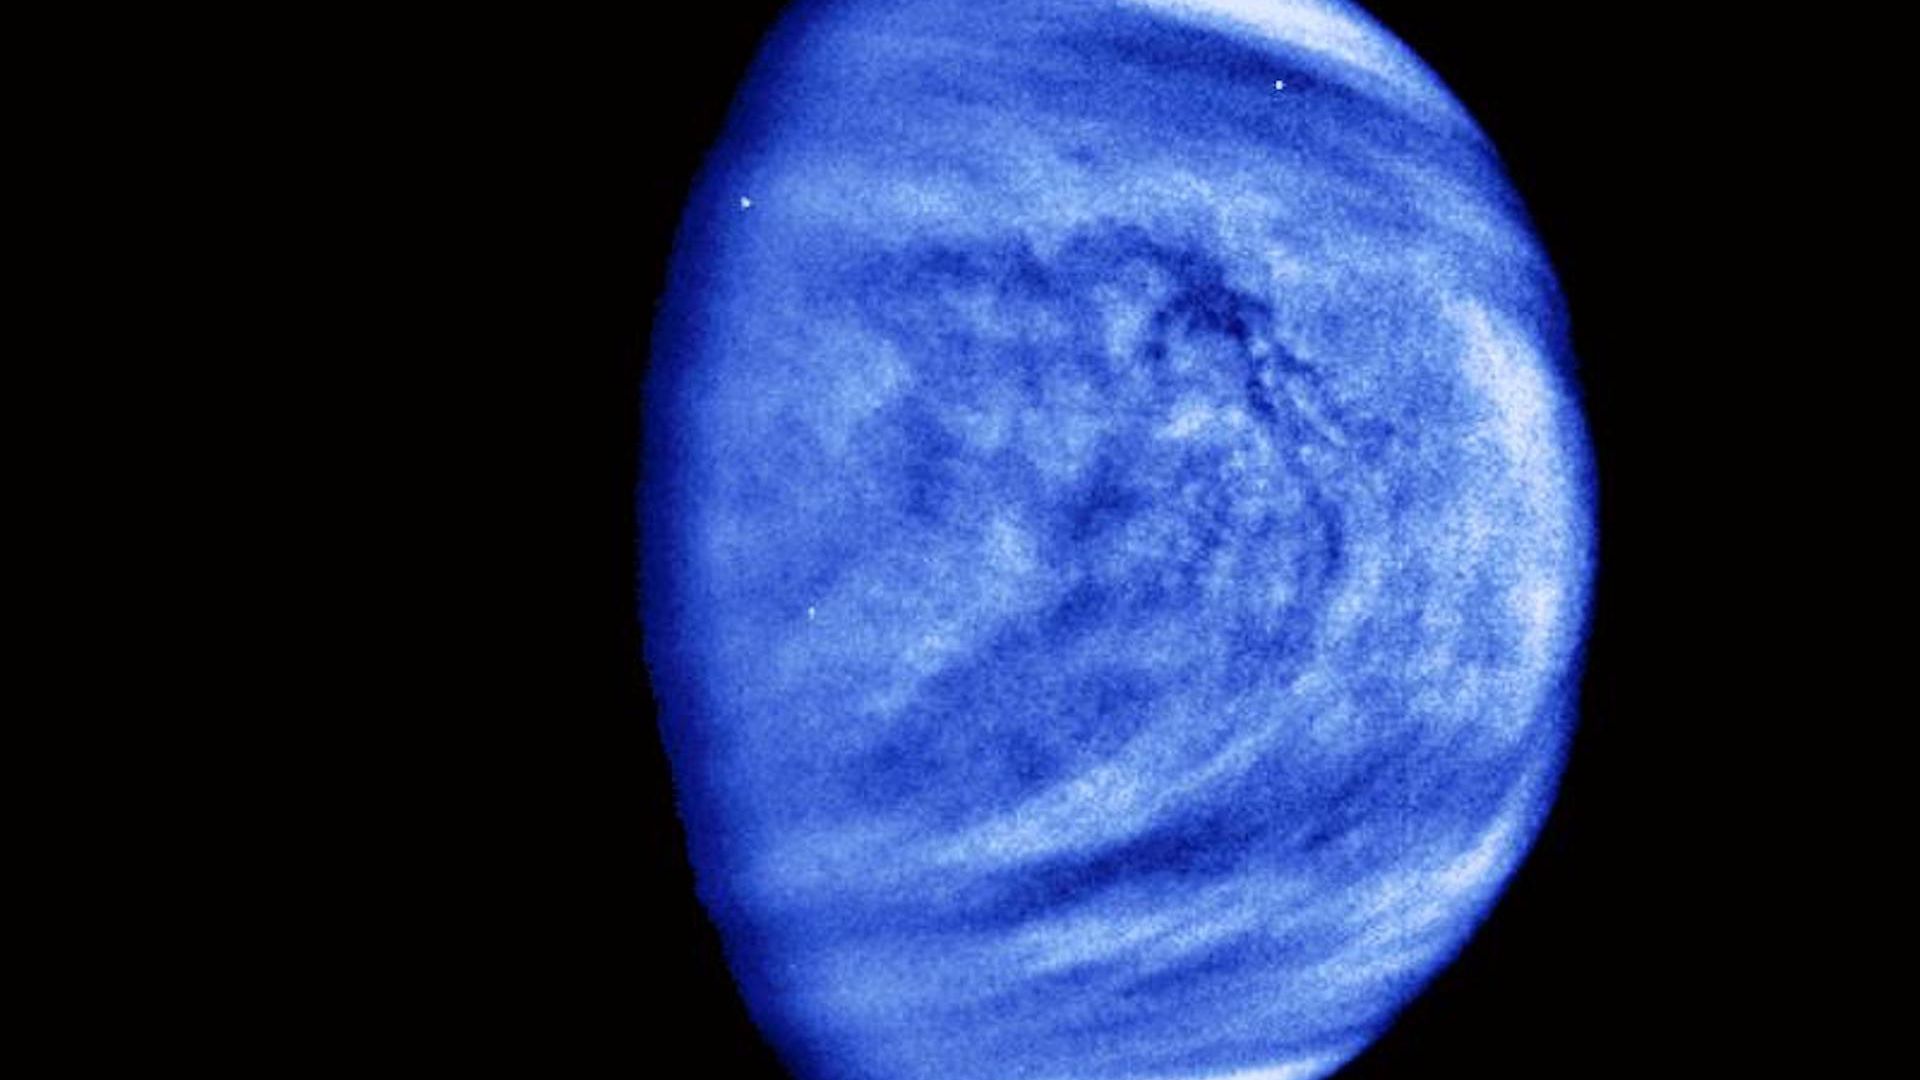 A filtered image of Venus as seen by NASA's Galileo spacecraft. Photo: NASA/JPL